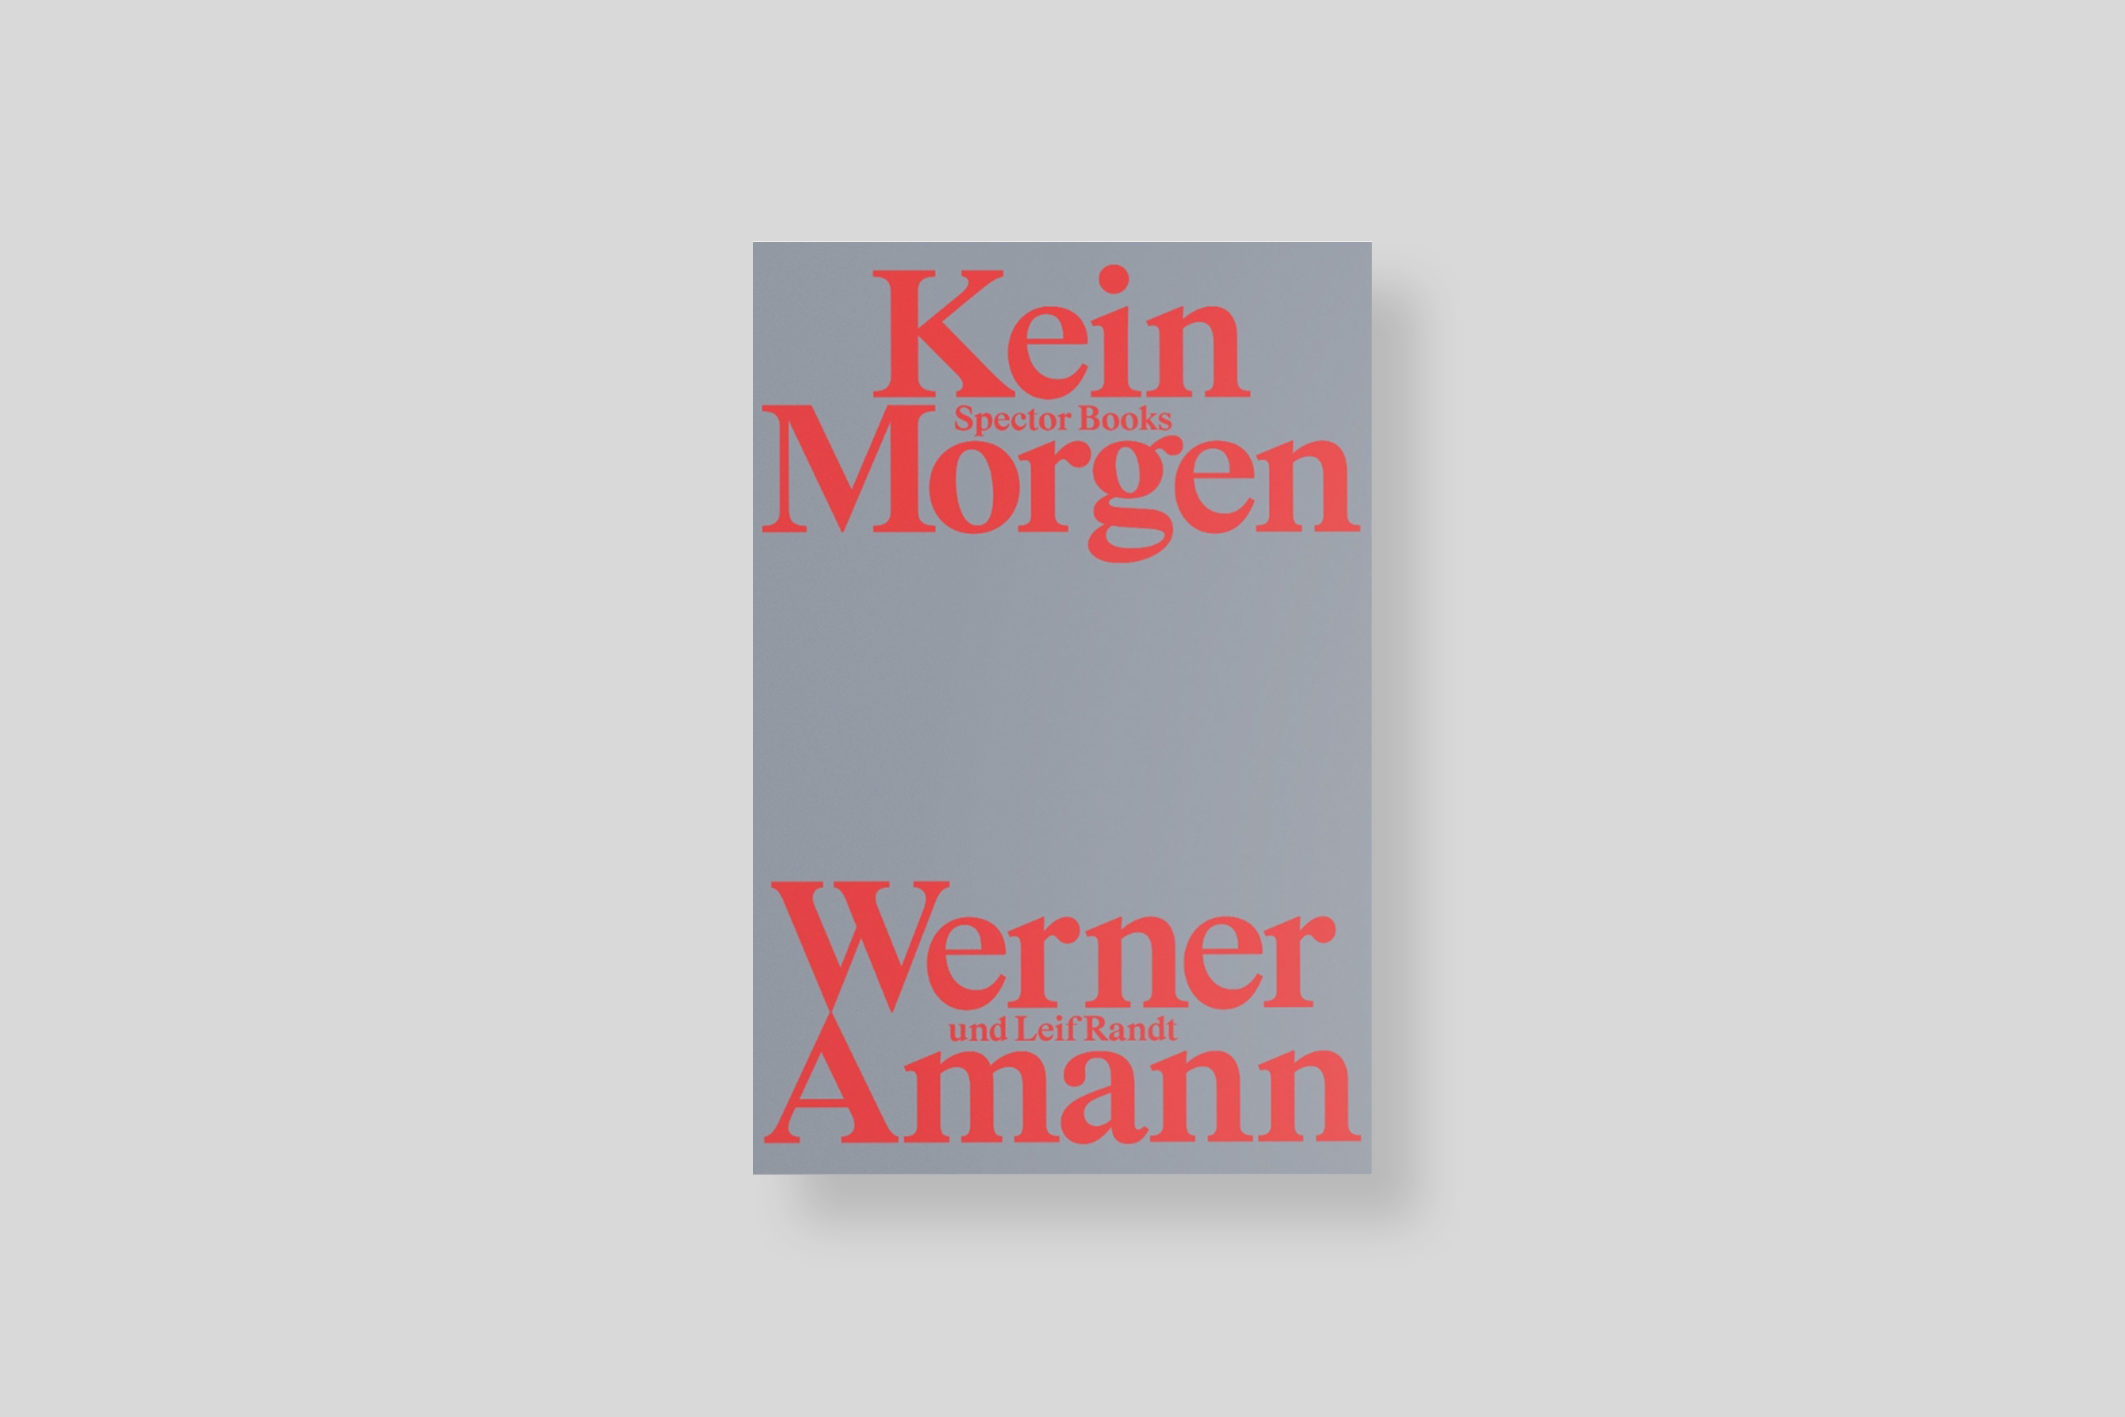 kein-morgen-amann-spector-books-cover